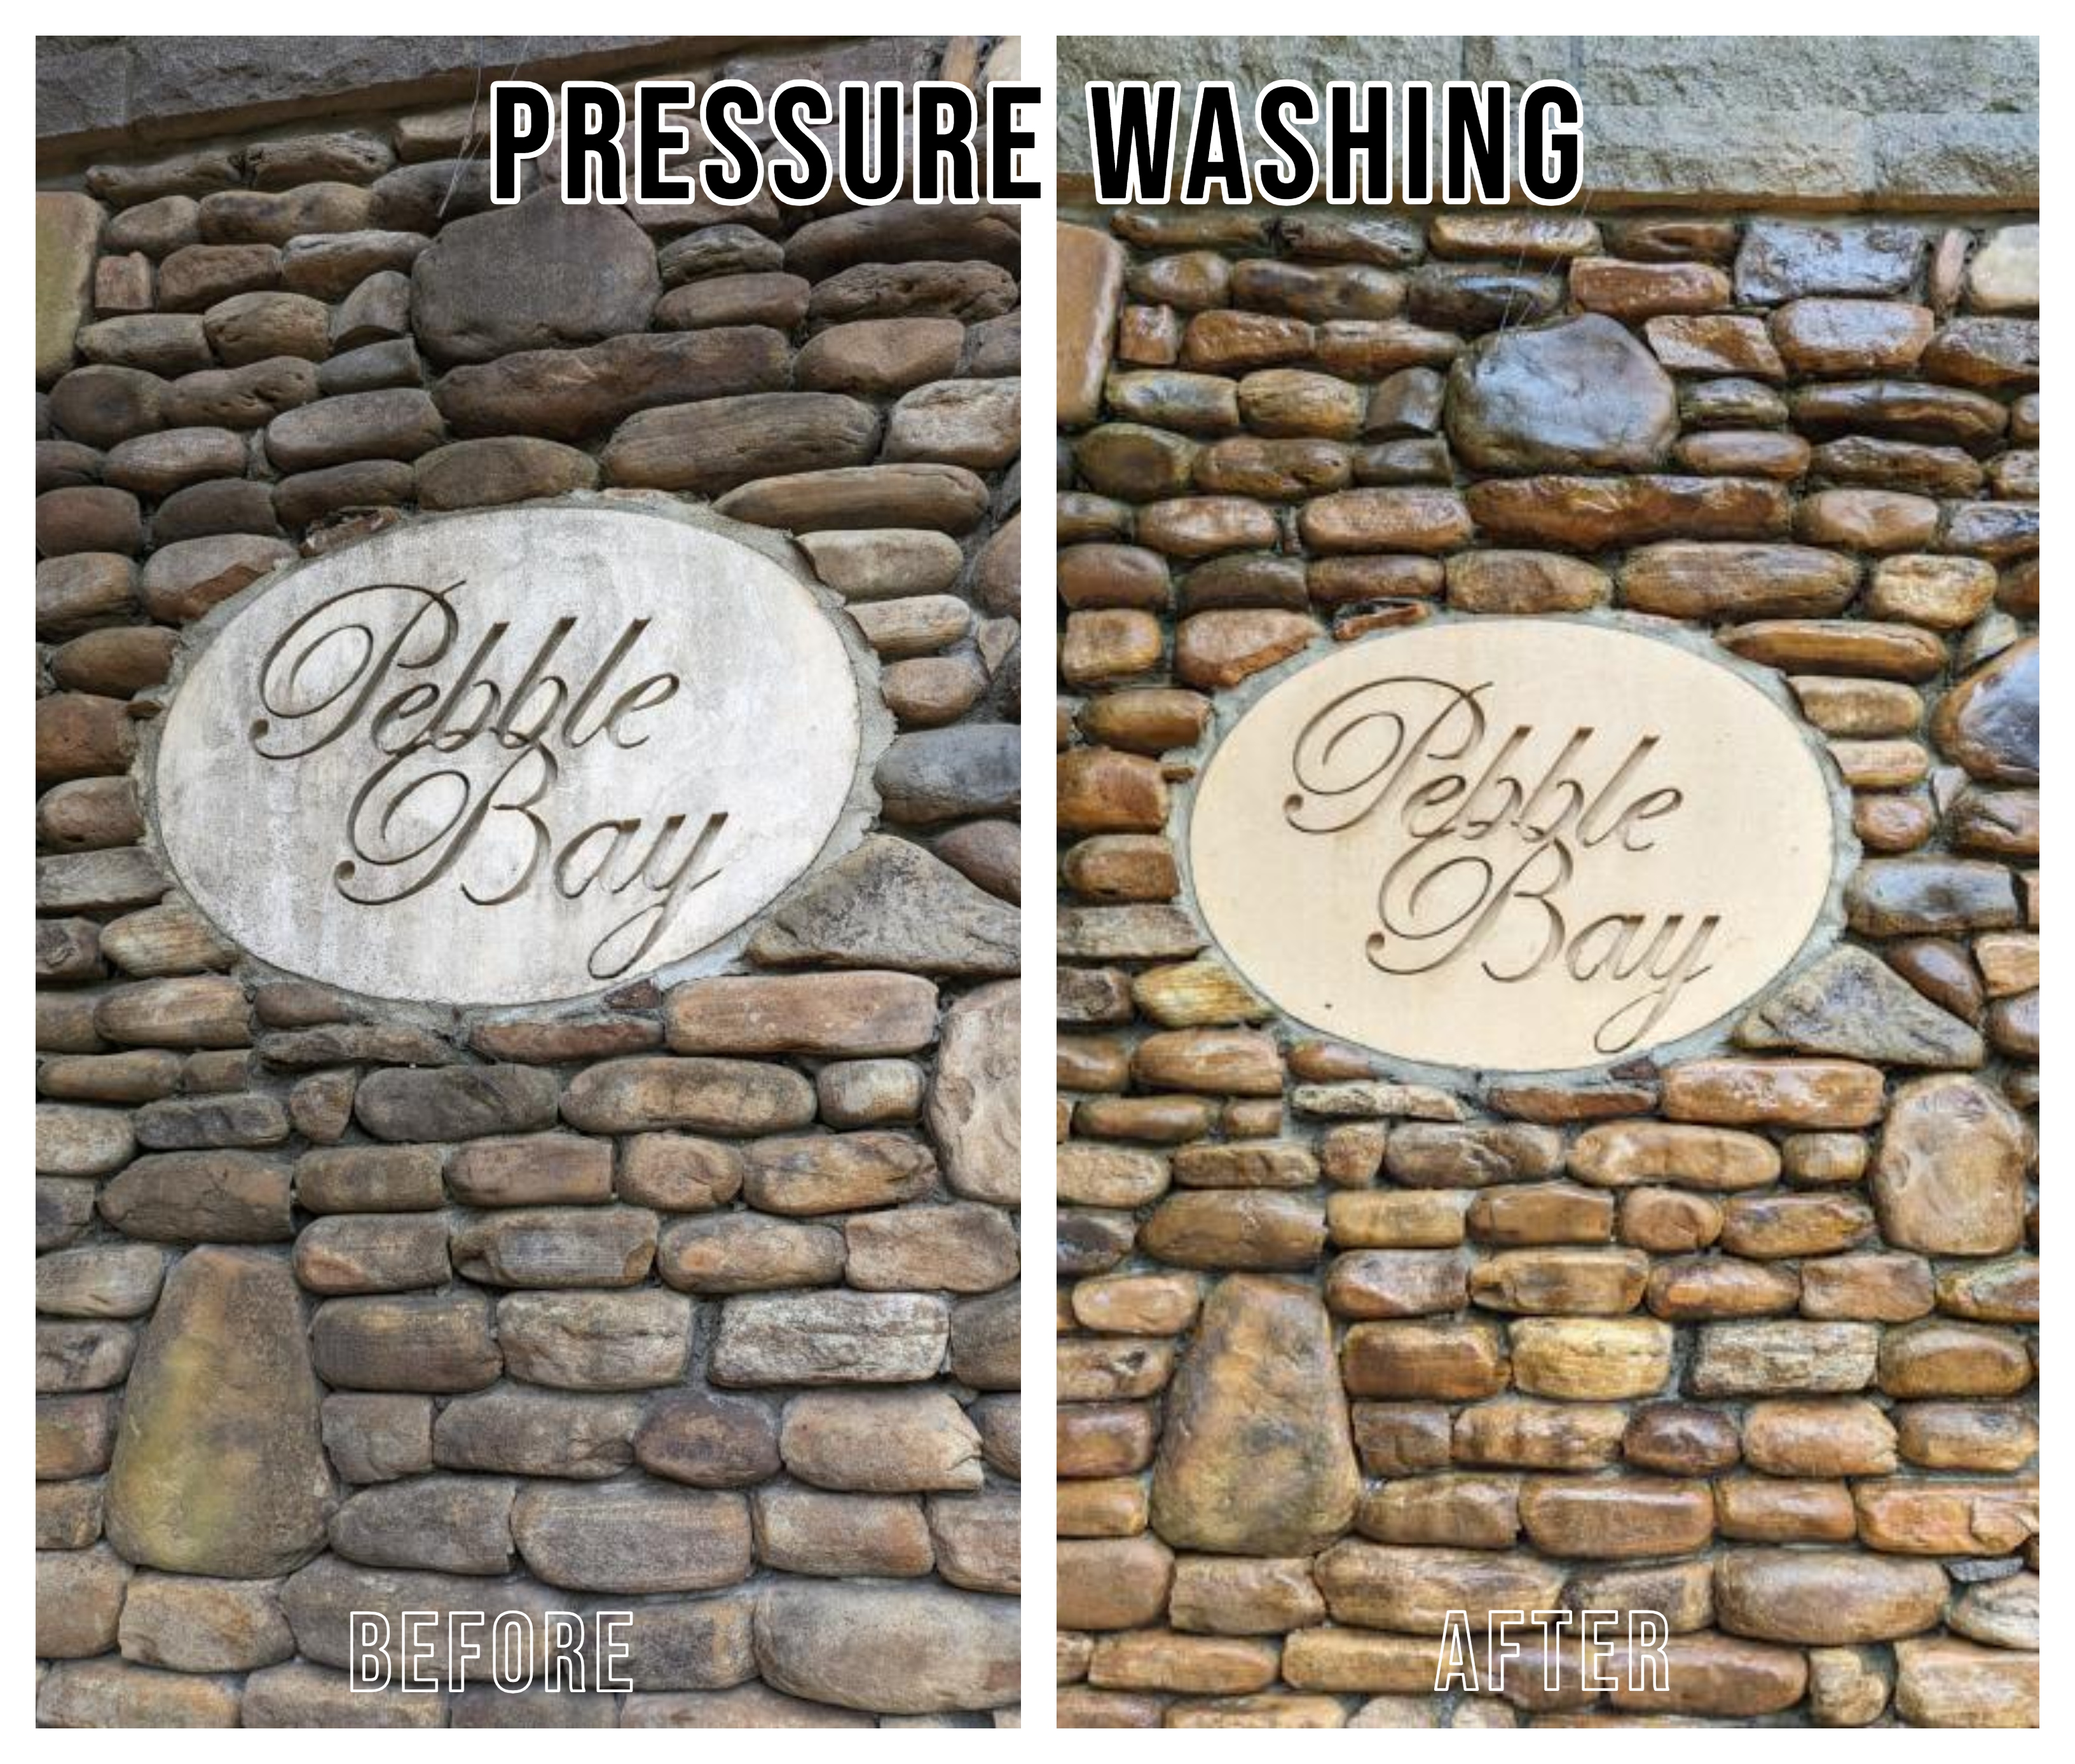 Elevating Neighborhood Aesthetics: Pressure Washing Project in Pebble Bay, Denver, NC